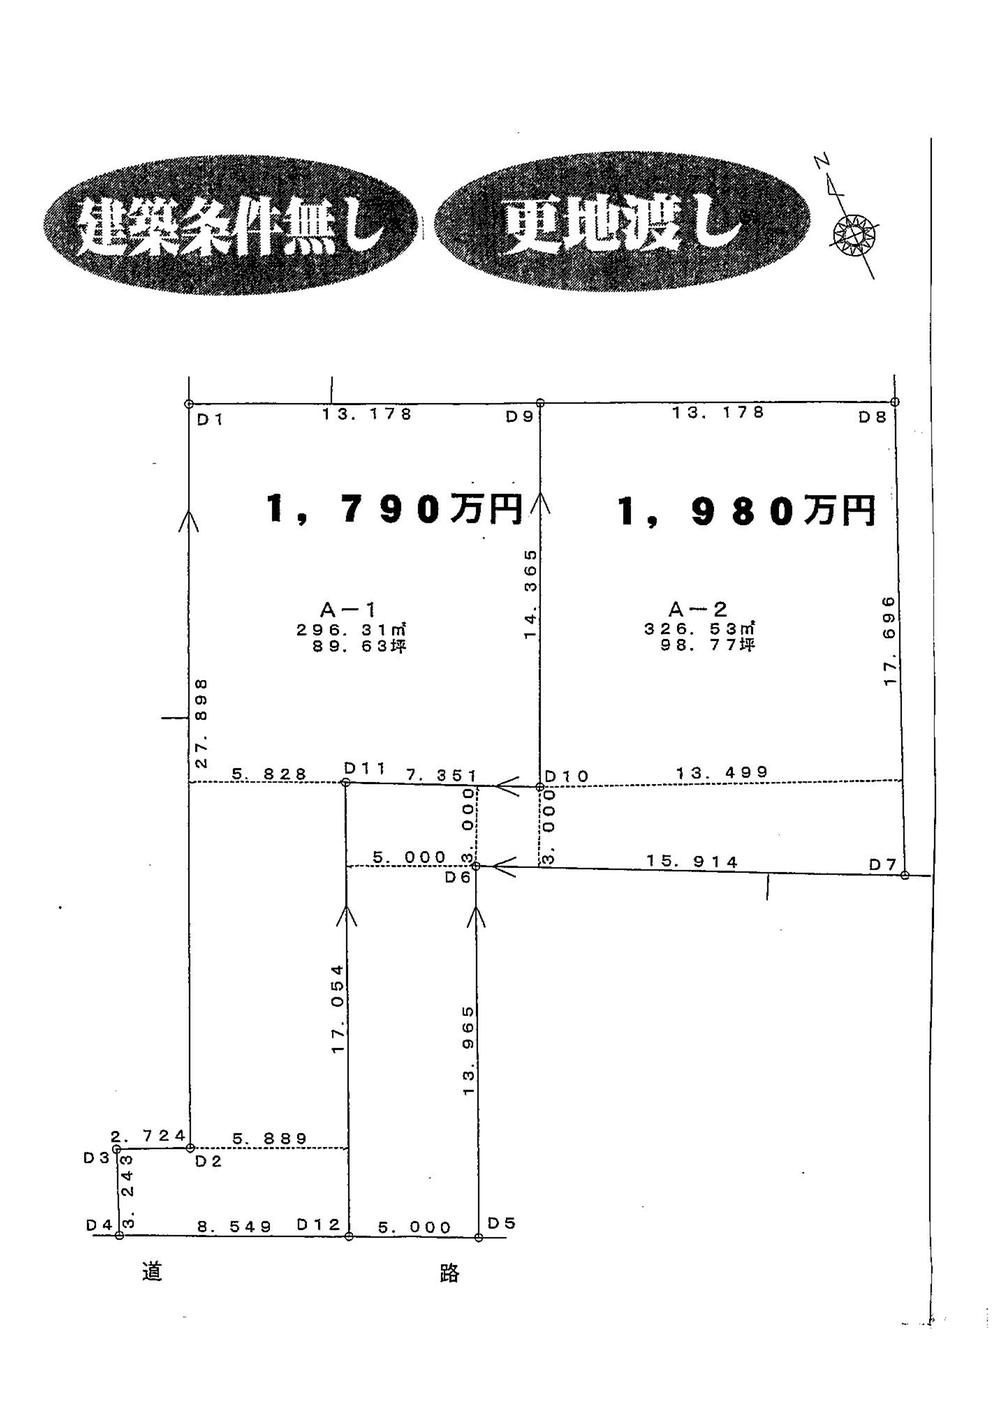 Compartment figure. Land price 17,900,000 yen, Land area 296.31 sq m